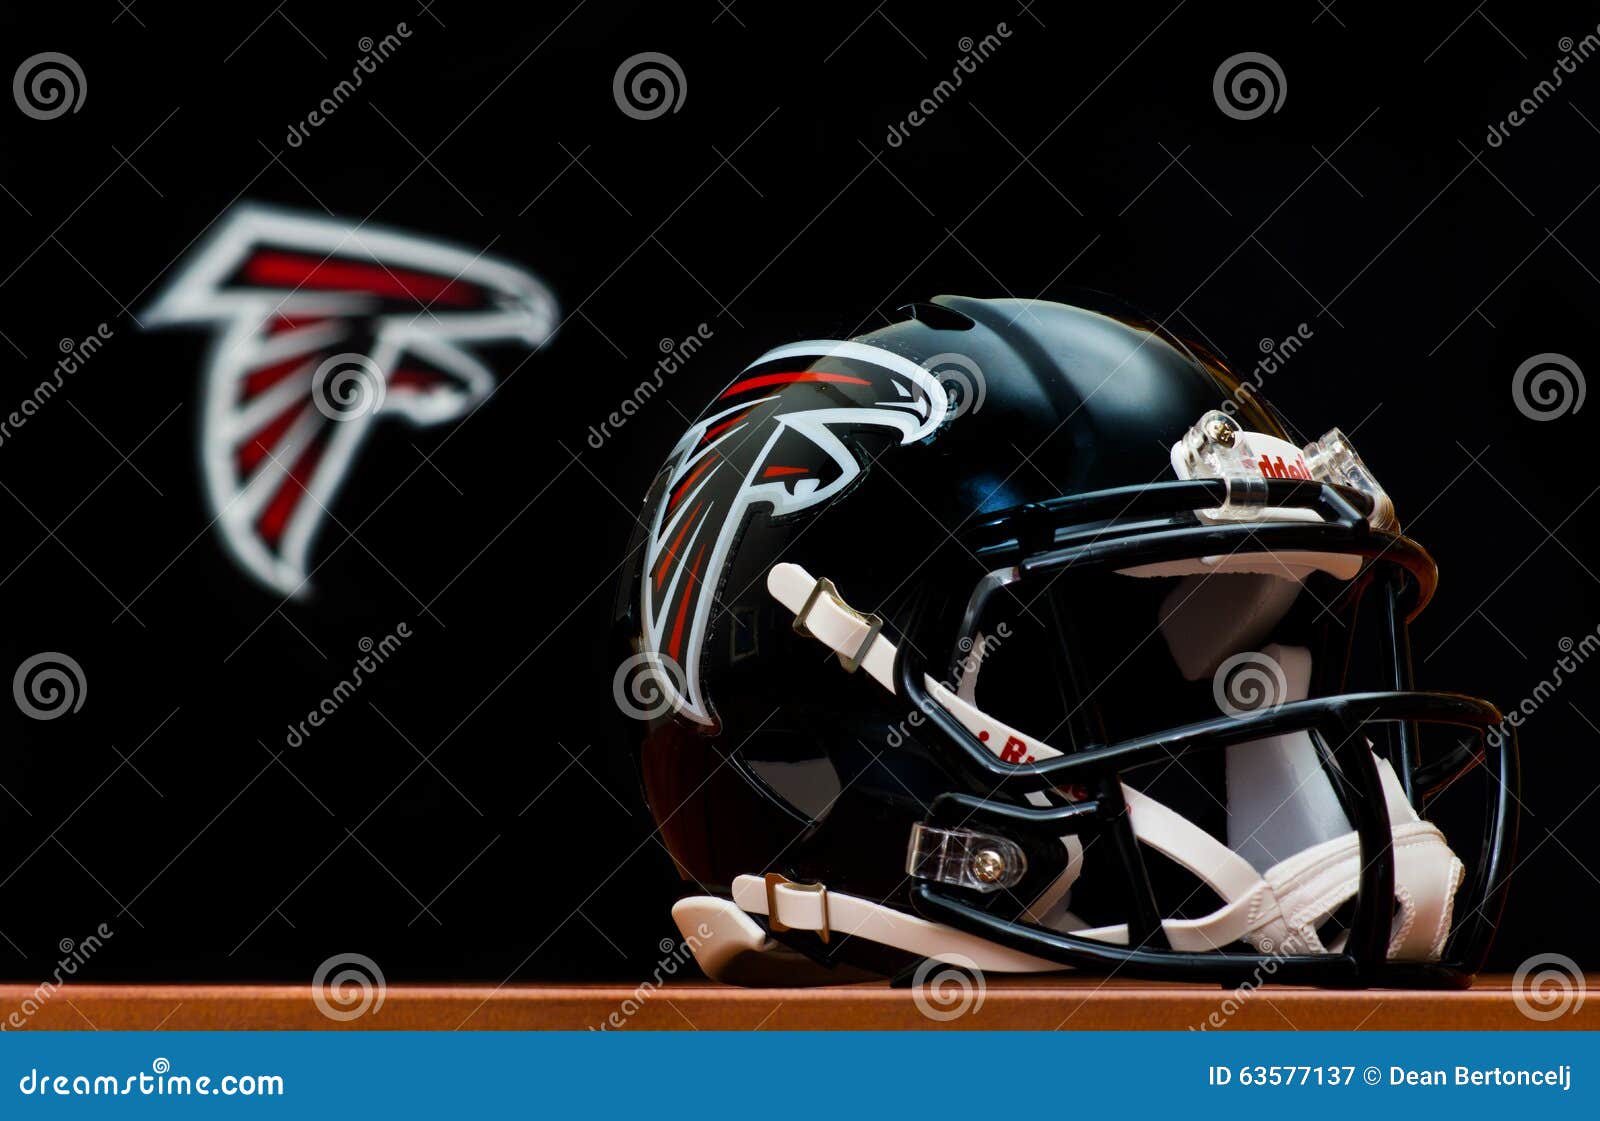 atlanta falcons new helmet